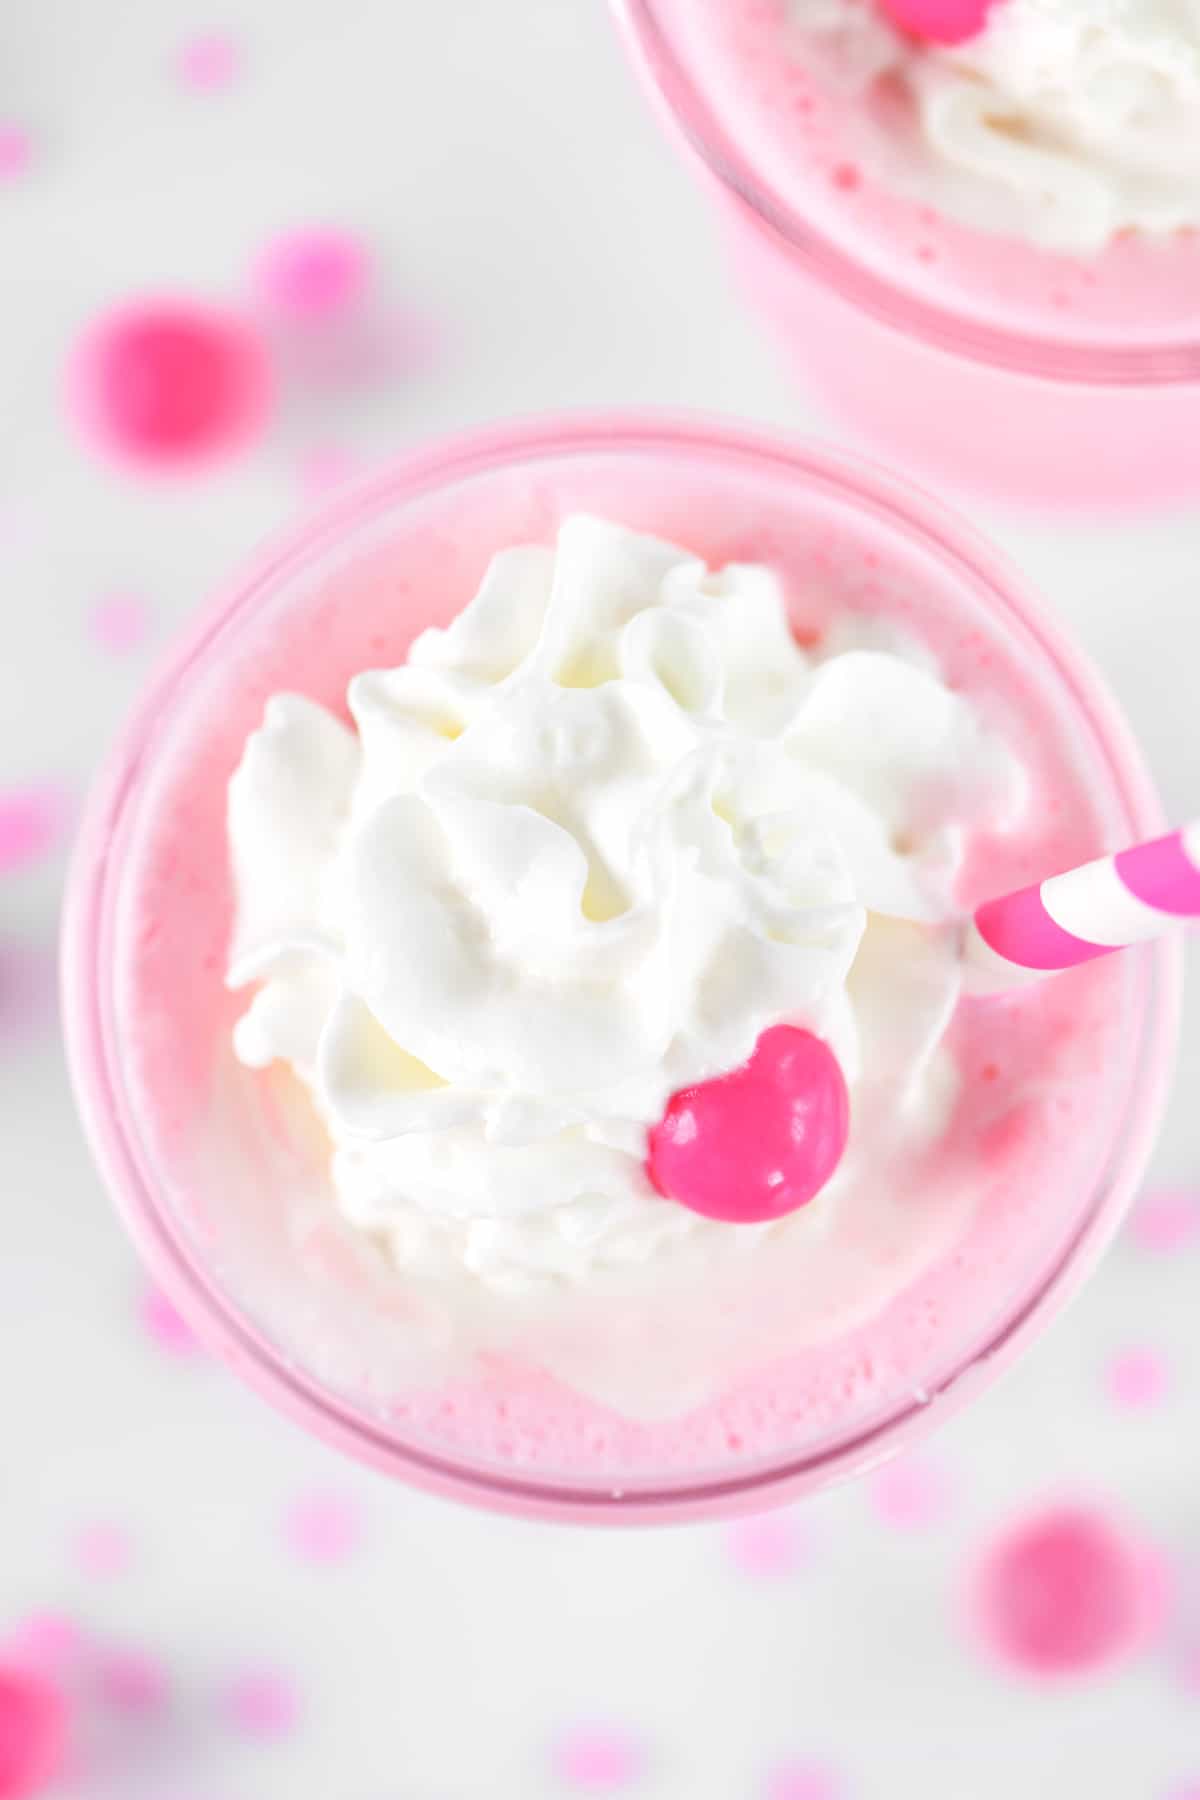 Bubblegum milkshake with whipped cream on top.